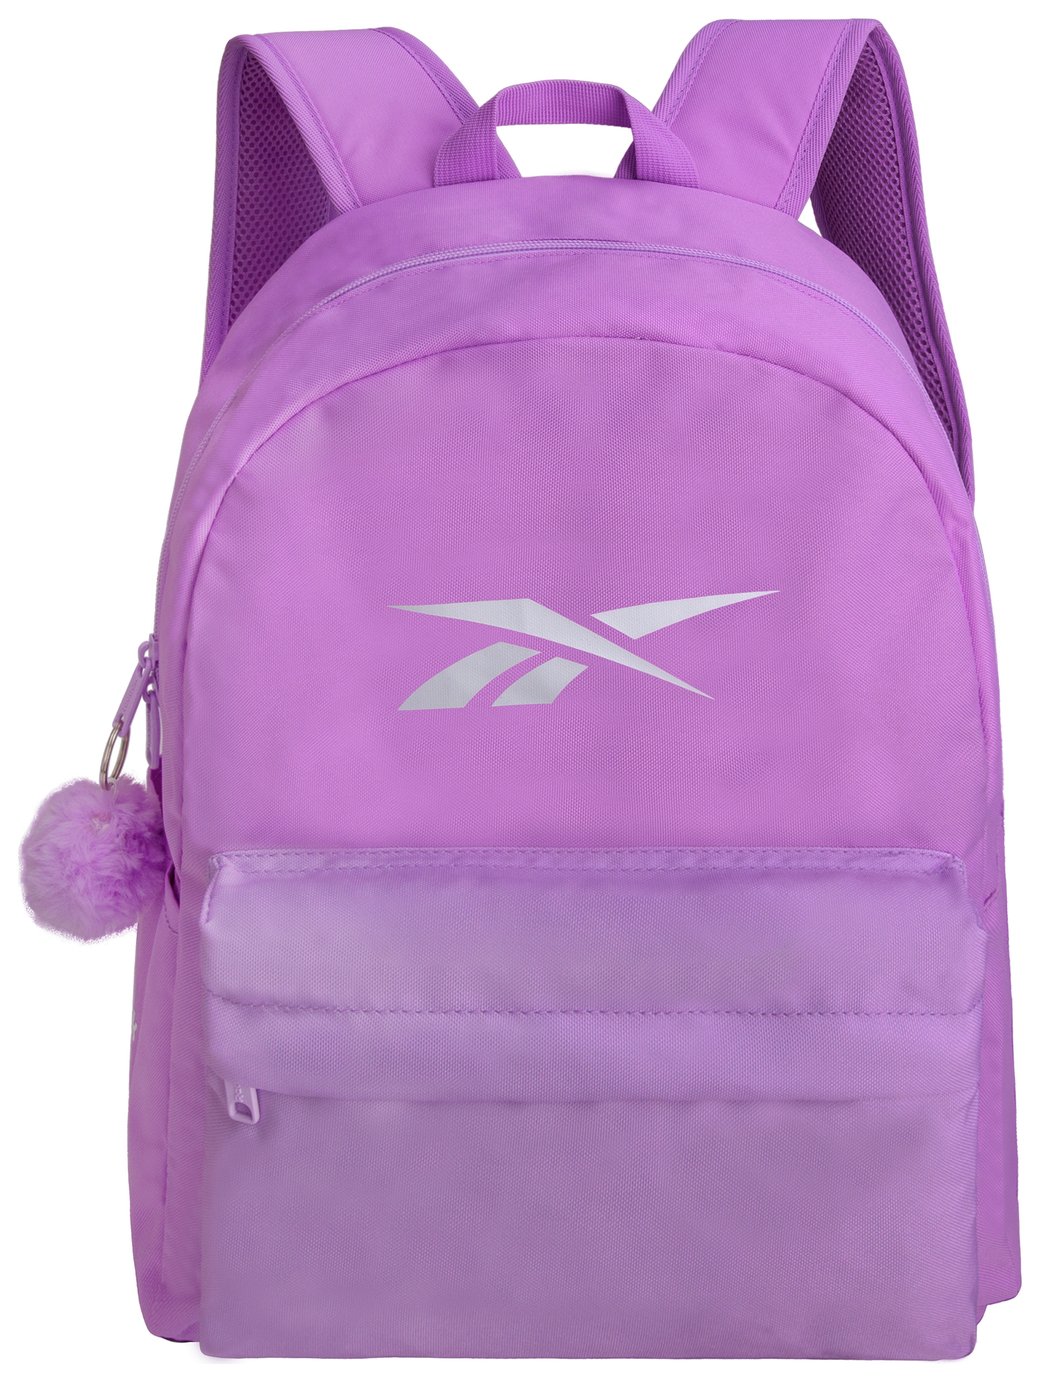 Reebok Classic Backpack - Lilac